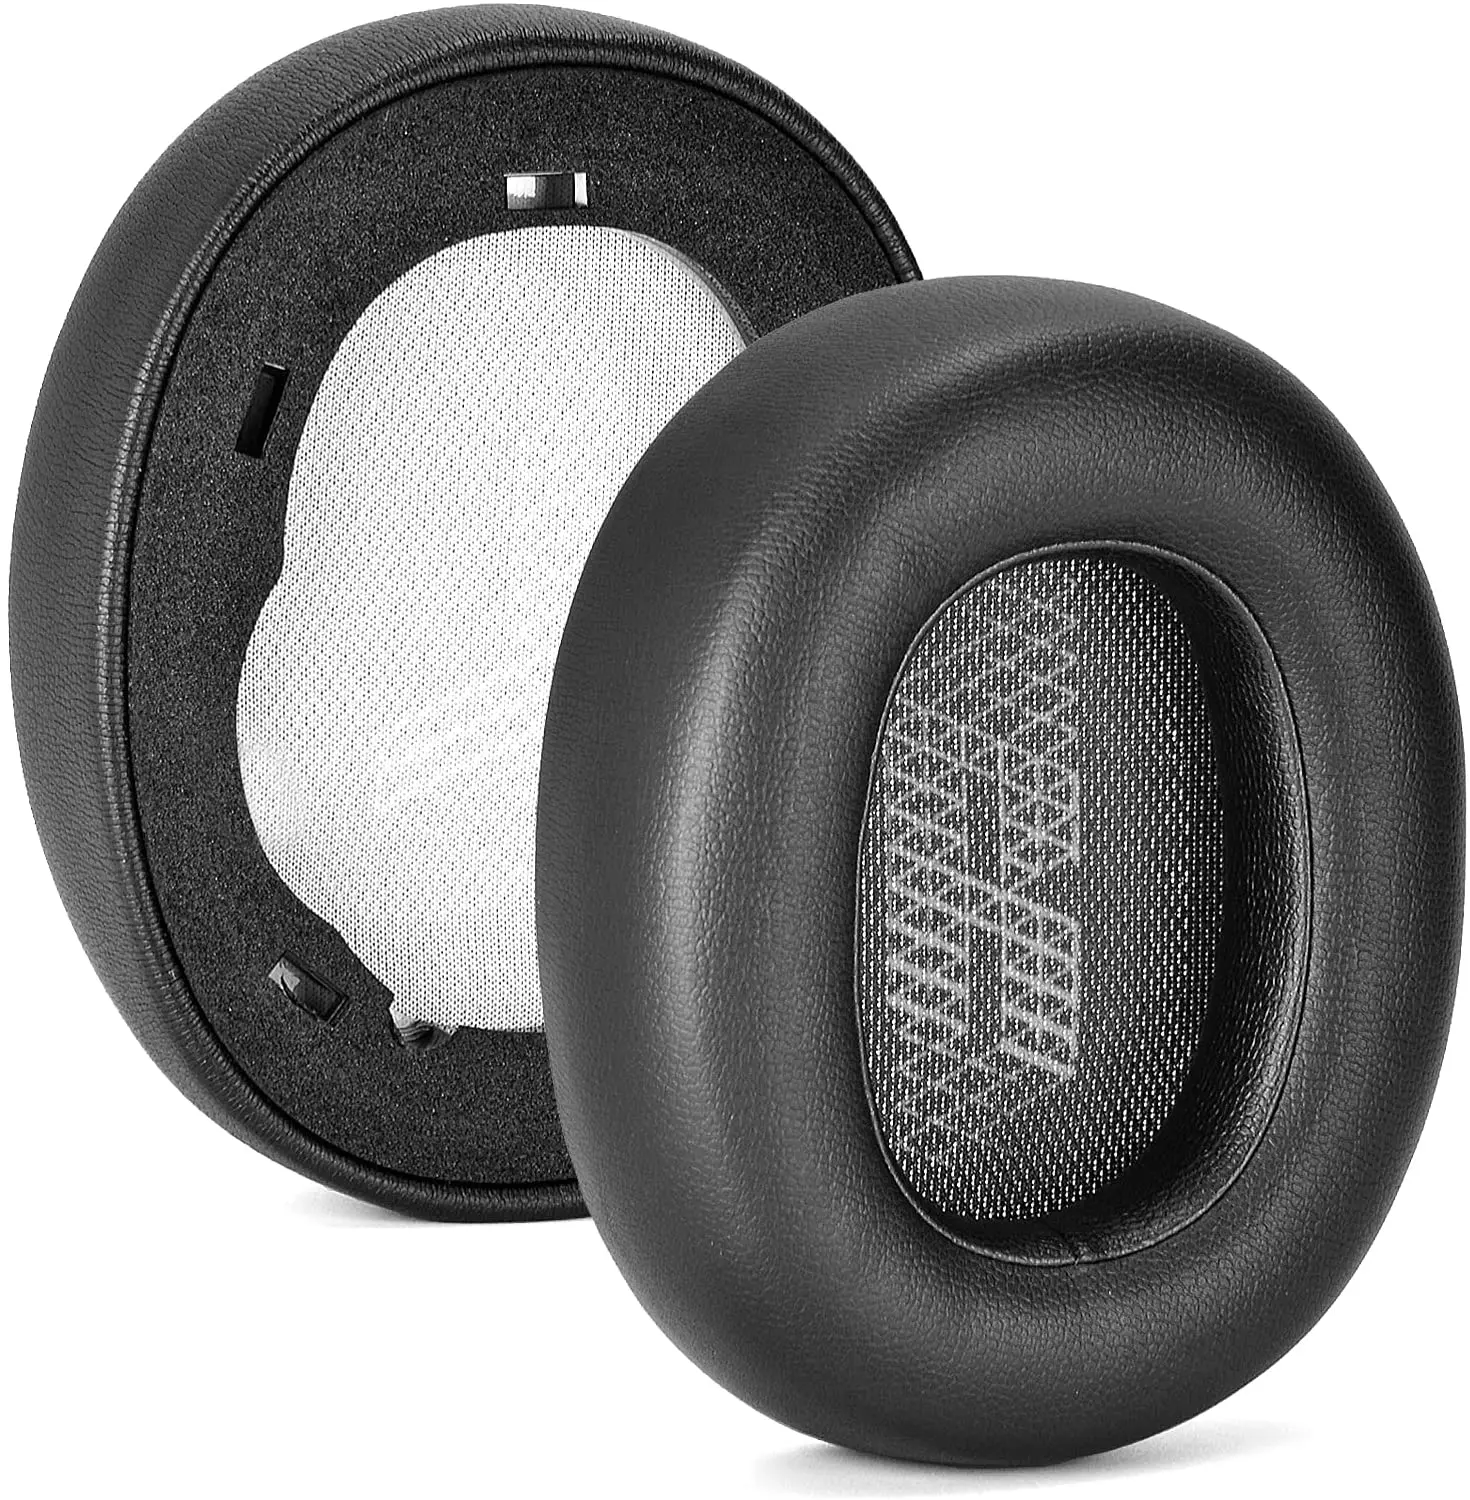 Nedgang junk At interagere Poyatu E65btnc Earpad For Jbl E65 E65btnc / Duet Nc Duetnc Headphone  Earpads Replacement Ear Pad Cushion Cover - Protective Sleeve - AliExpress